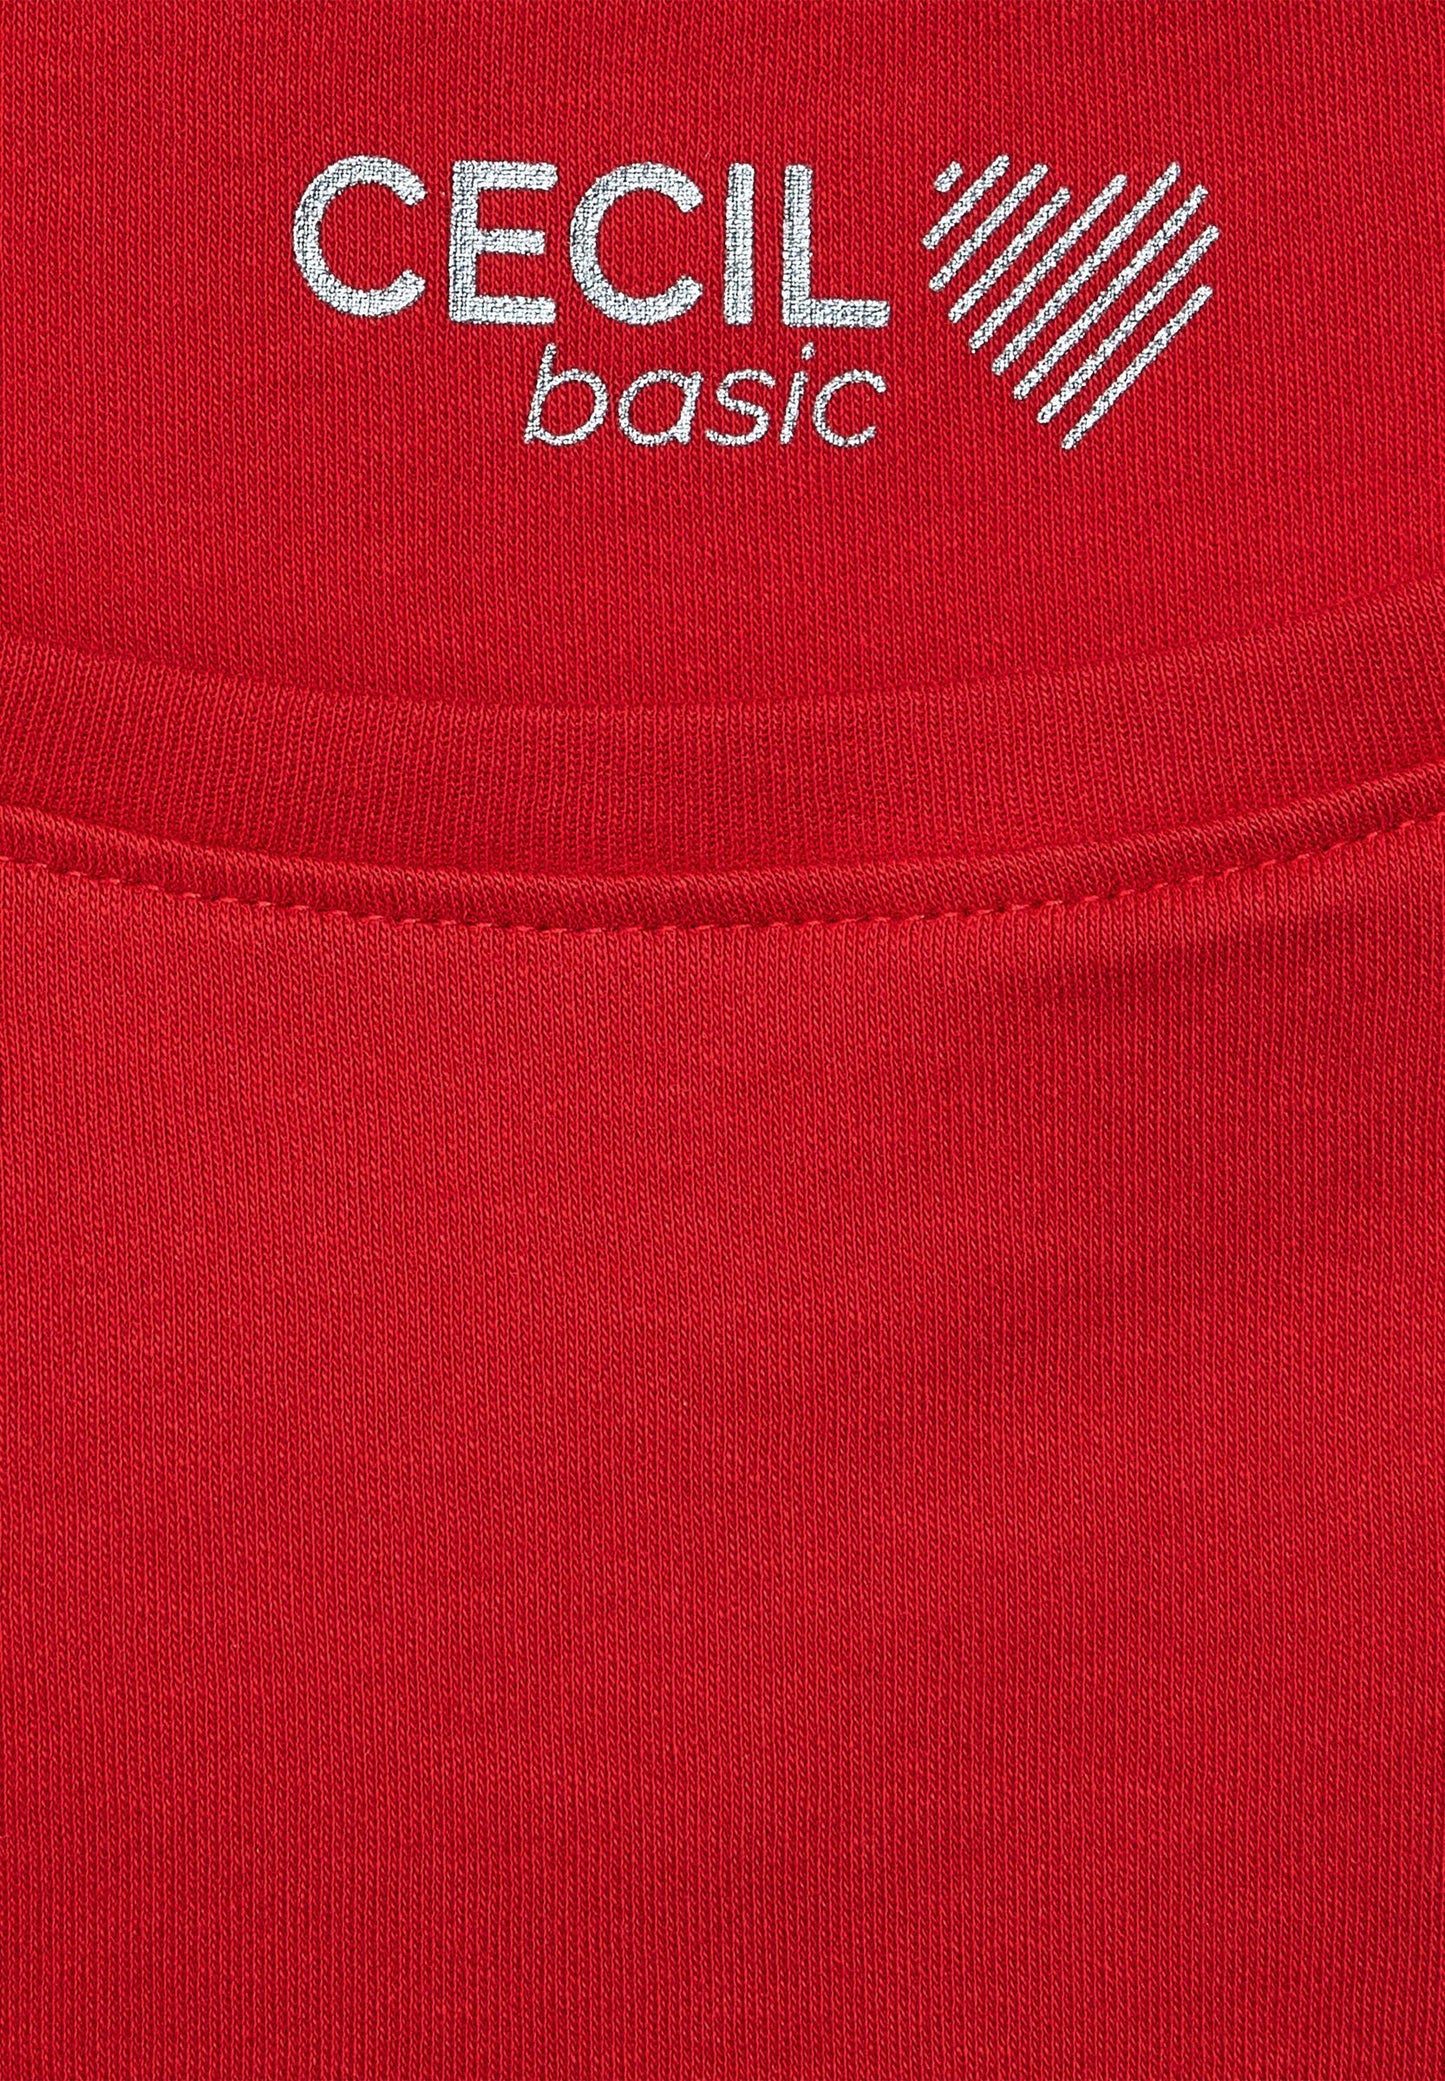 Basic Shirt in Unifarbe